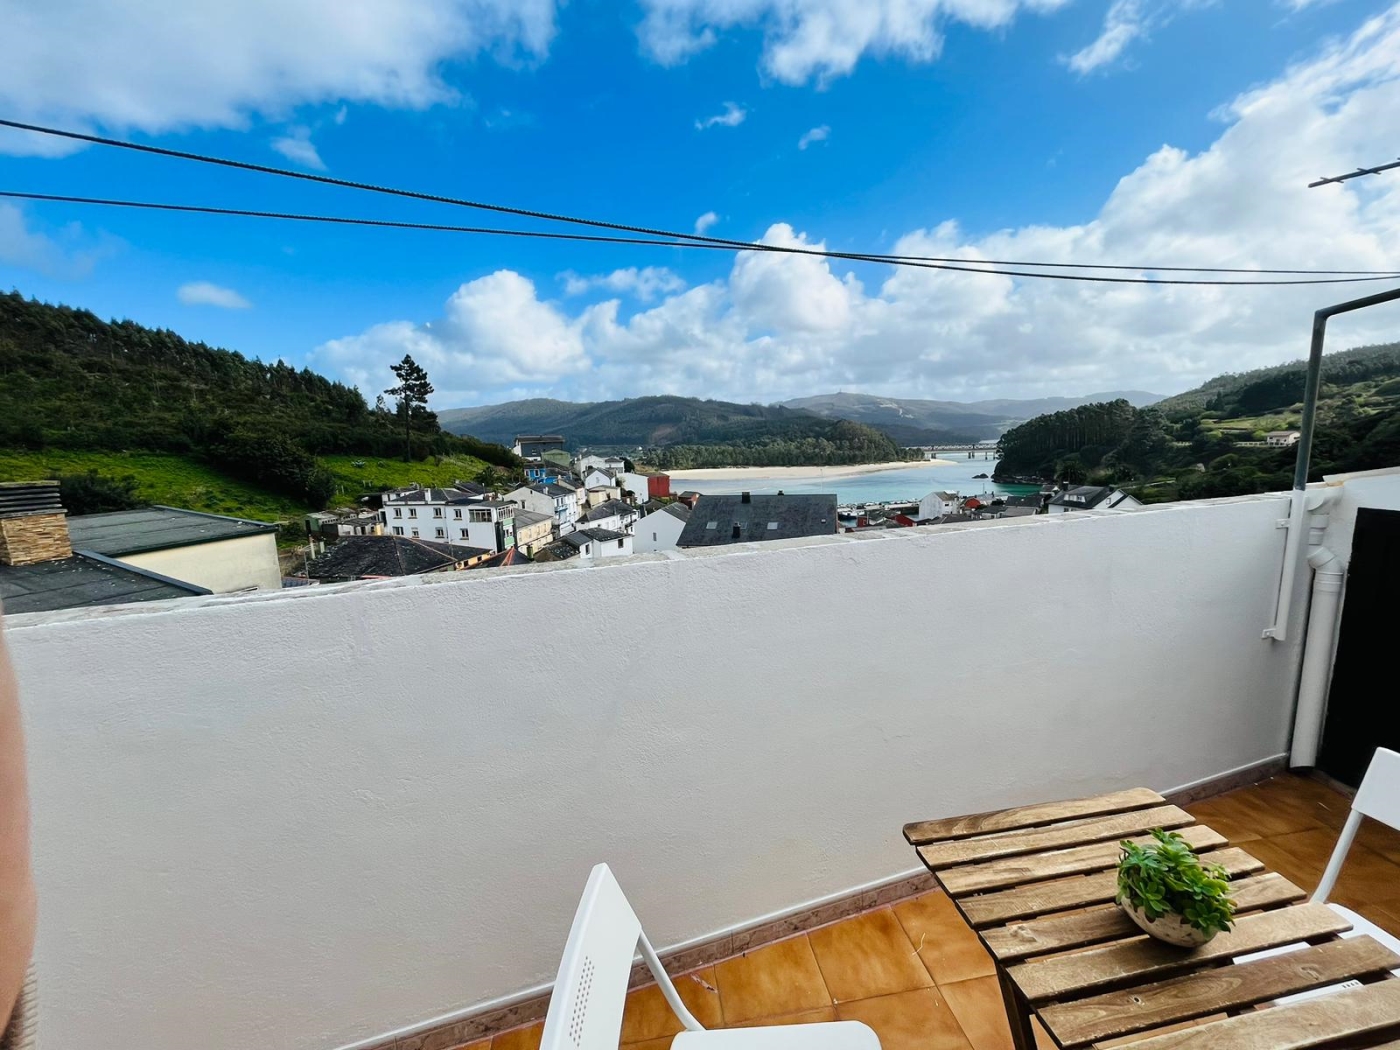 Encantadora vivienda con terraza con vistas al mar en la Ría do Barqueiro en Mañón